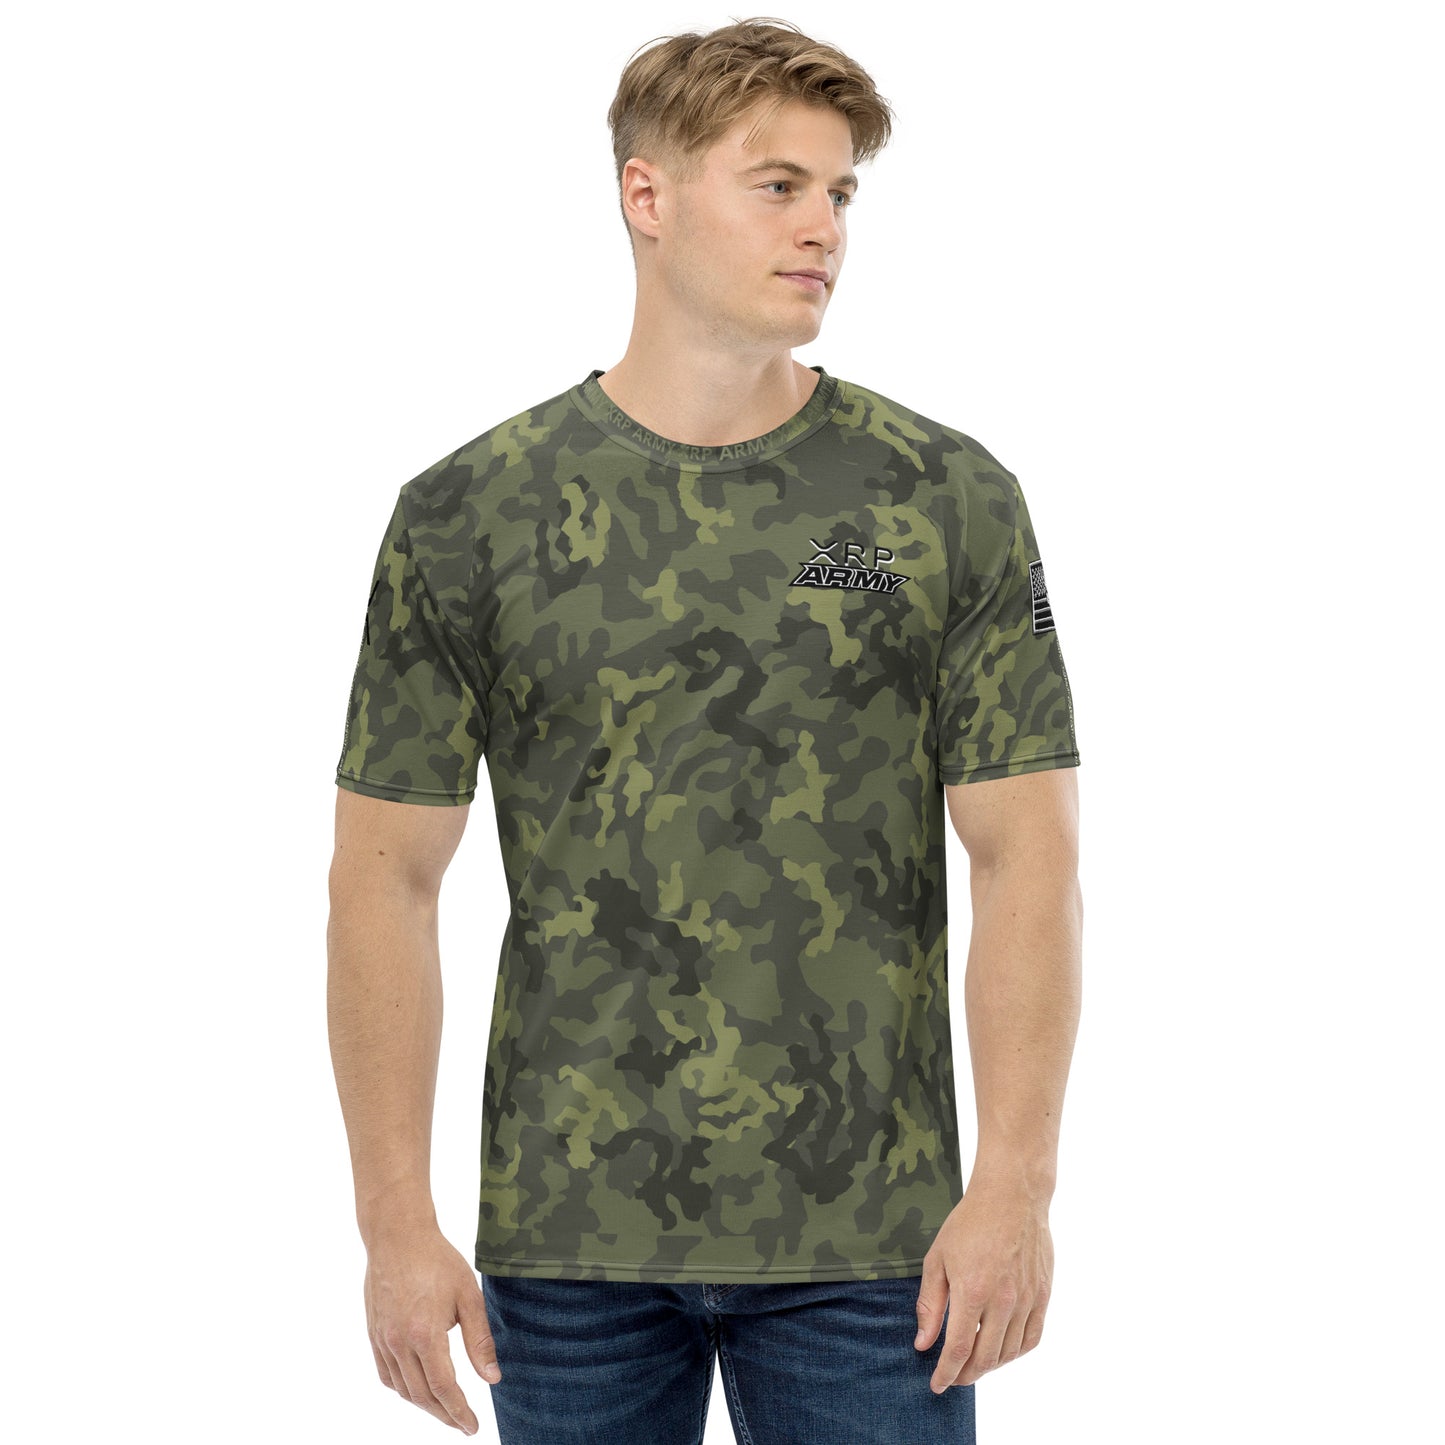 Xrp Army Unit T-Shirt